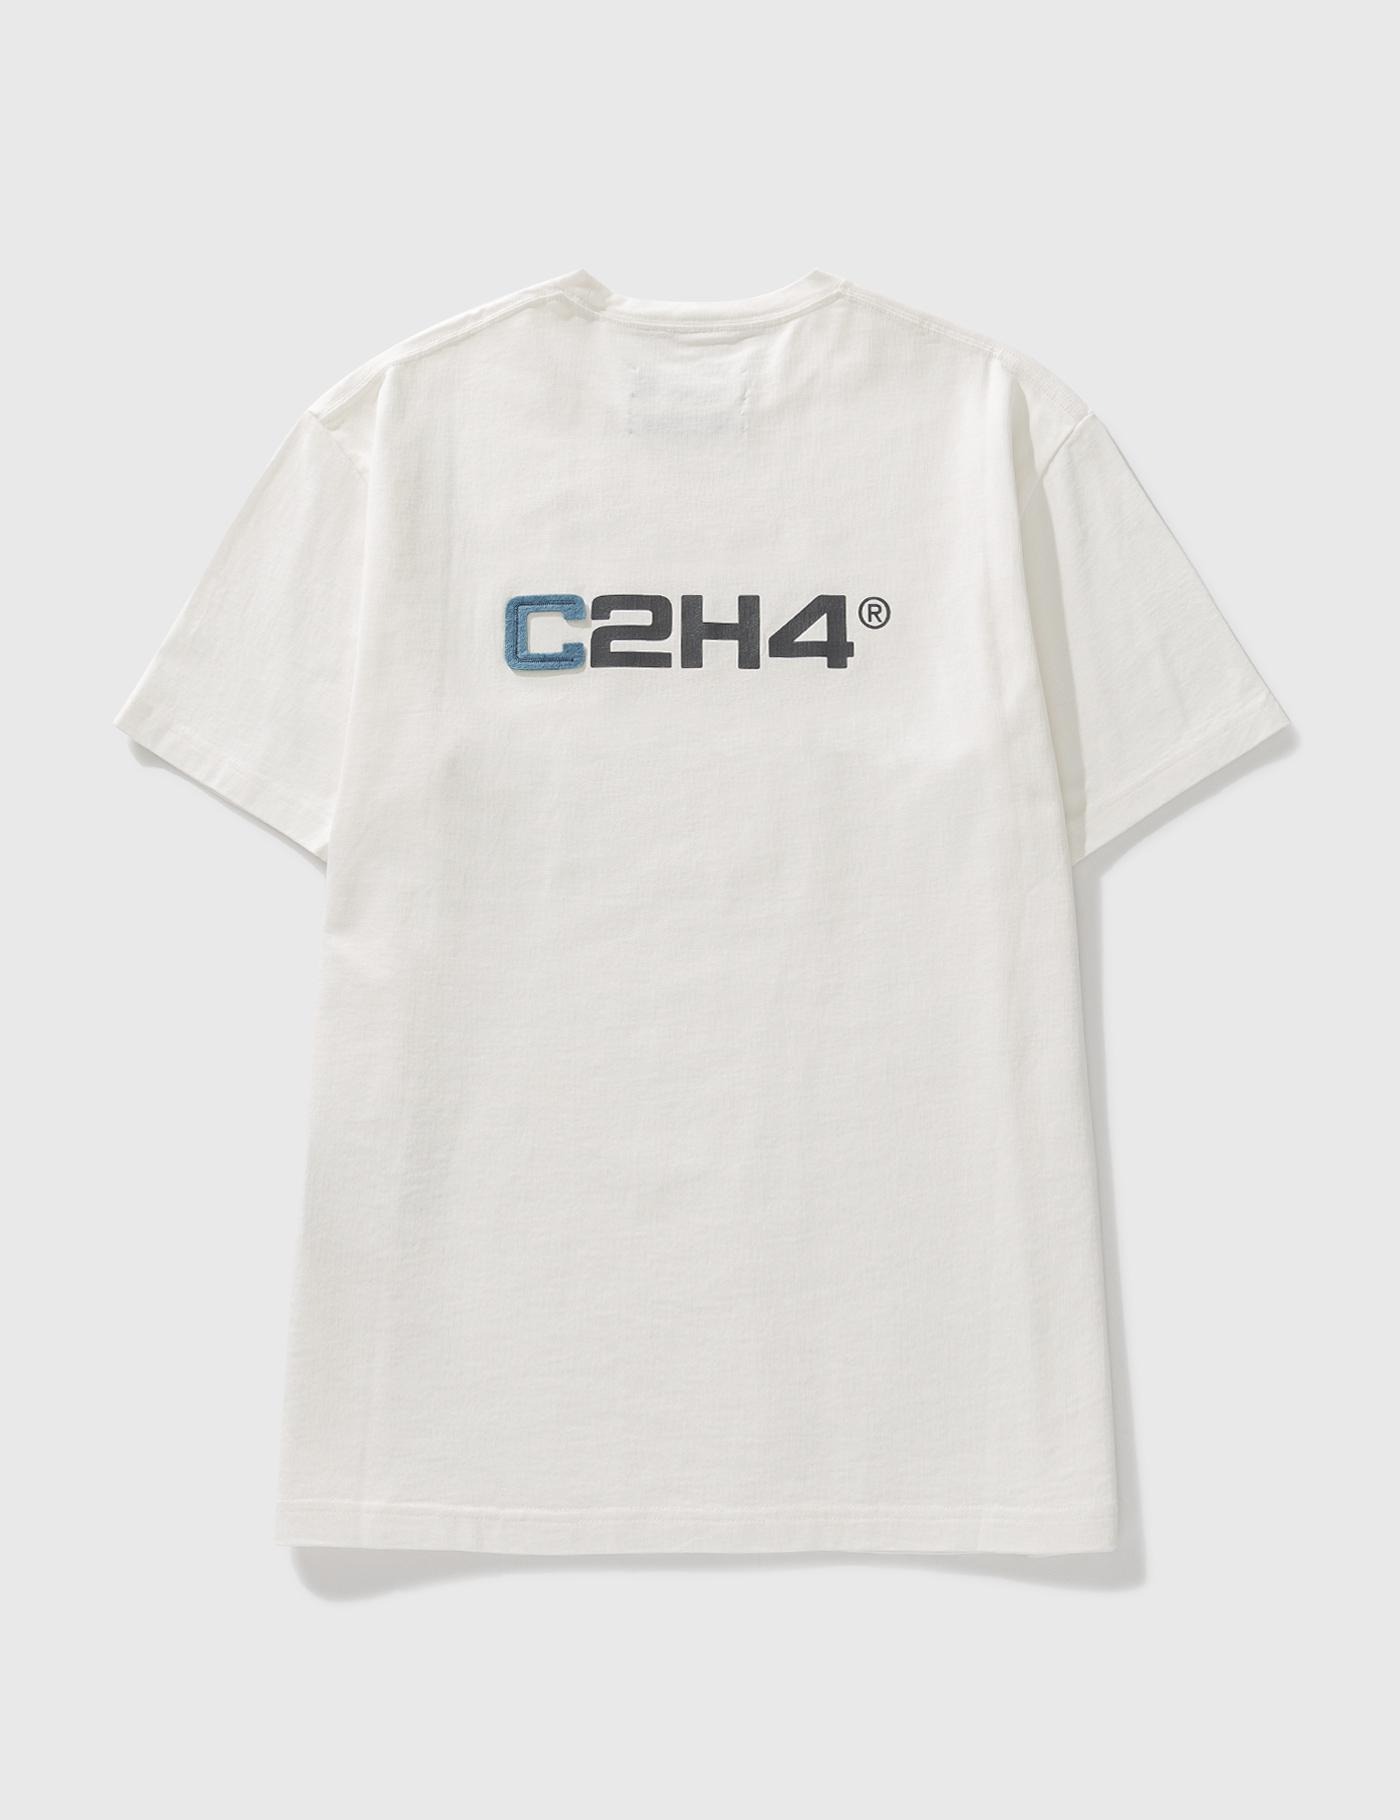 Staff Uniform Staff Logo T-shirt by C2H4